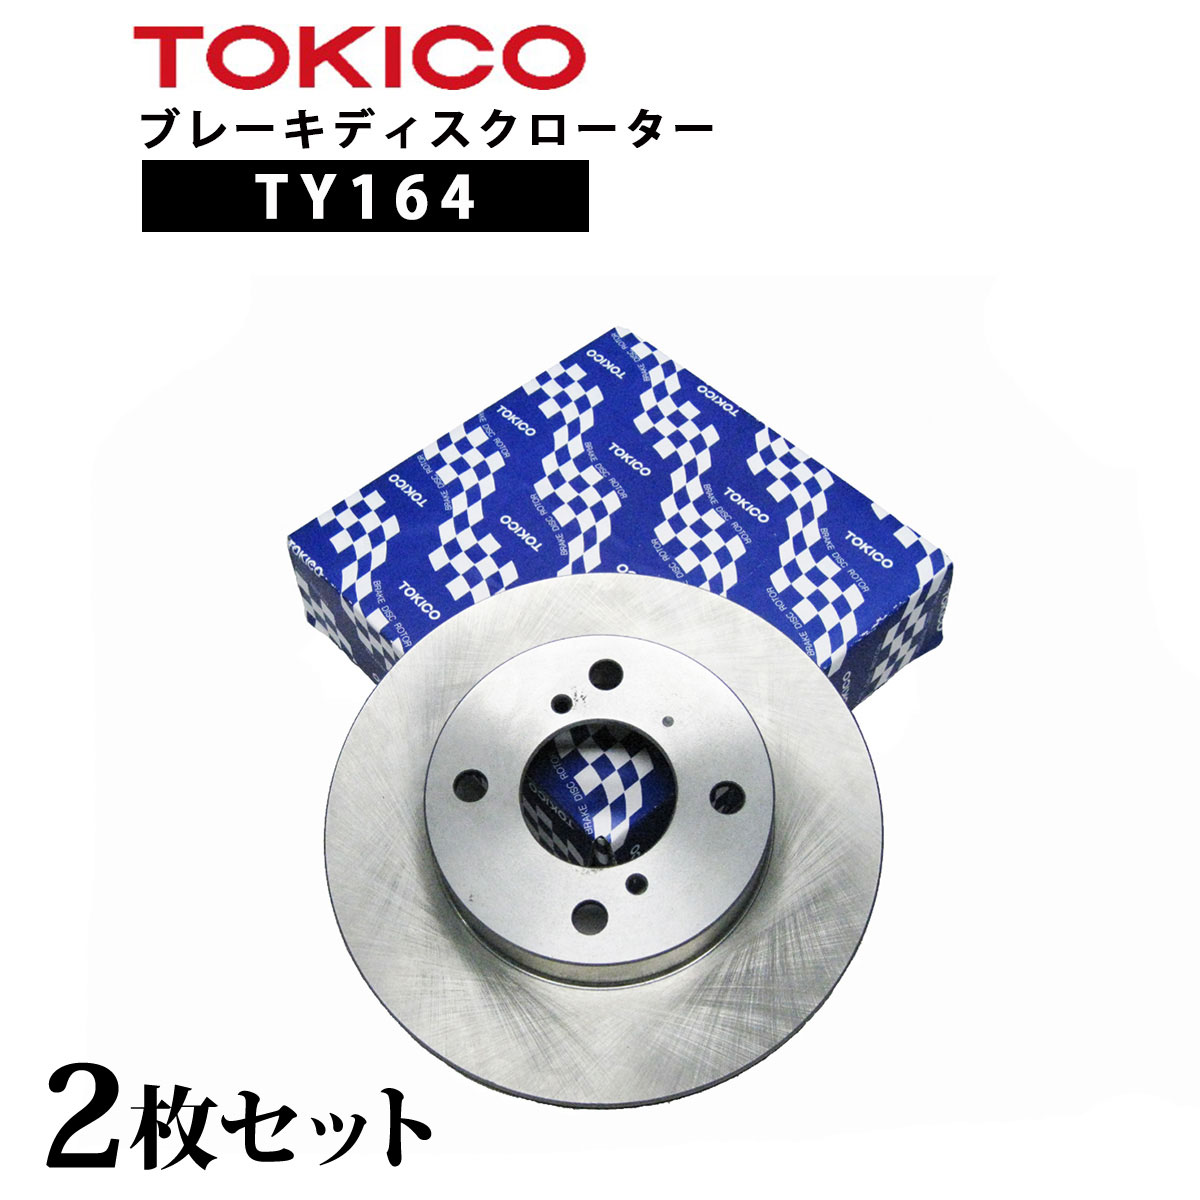 TY164 TOKICO ブレーキディスクローター リア 2枚 左右セット トキコ 日立 適合 純正 スバル 26700-AE080 レガシー R GDA 他社 BD6911 RF206 E7018 F6-103 F6R111J